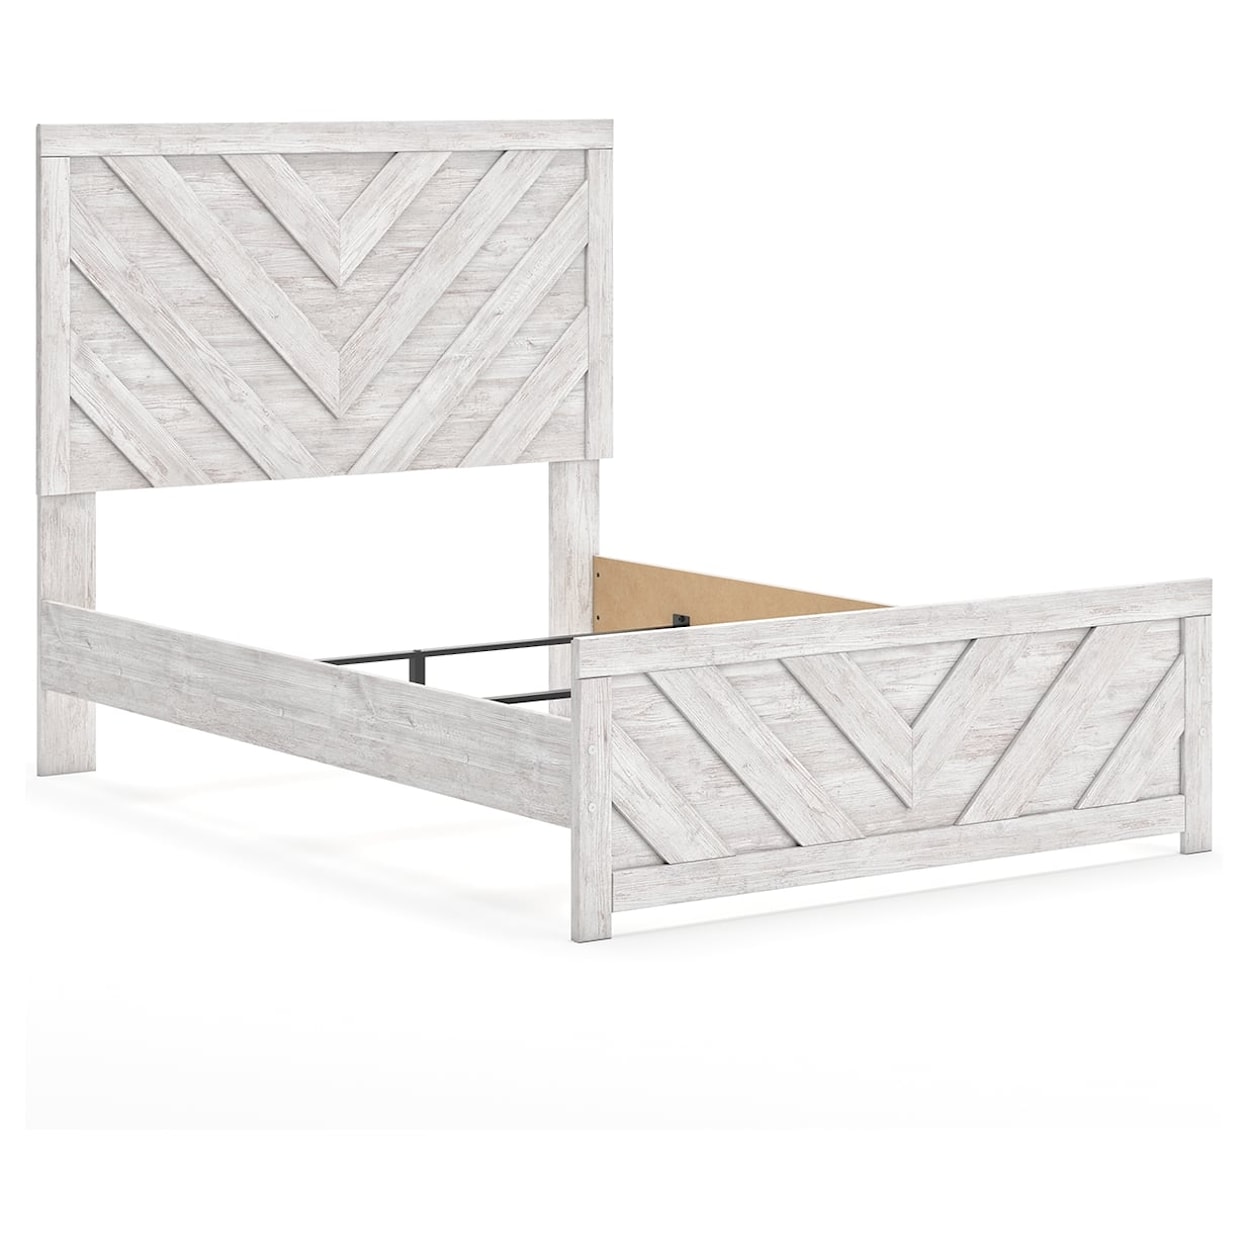 Ashley Furniture Signature Design Cayboni Full Panel Bed